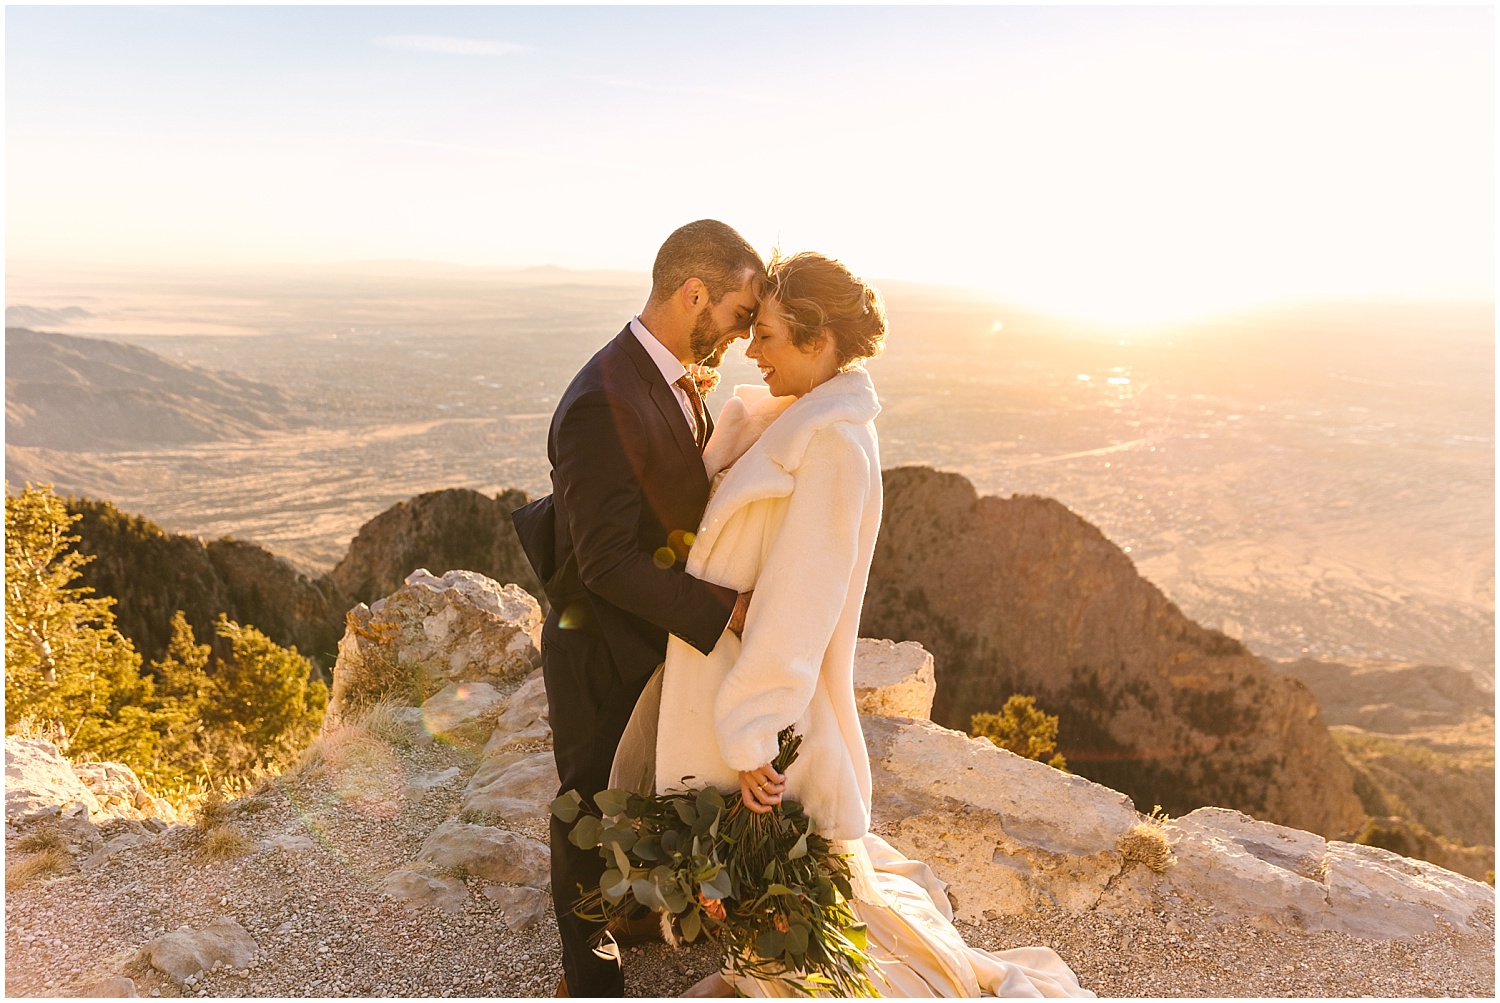 Bride and groom romantic sunset portraits at Sandia Crest